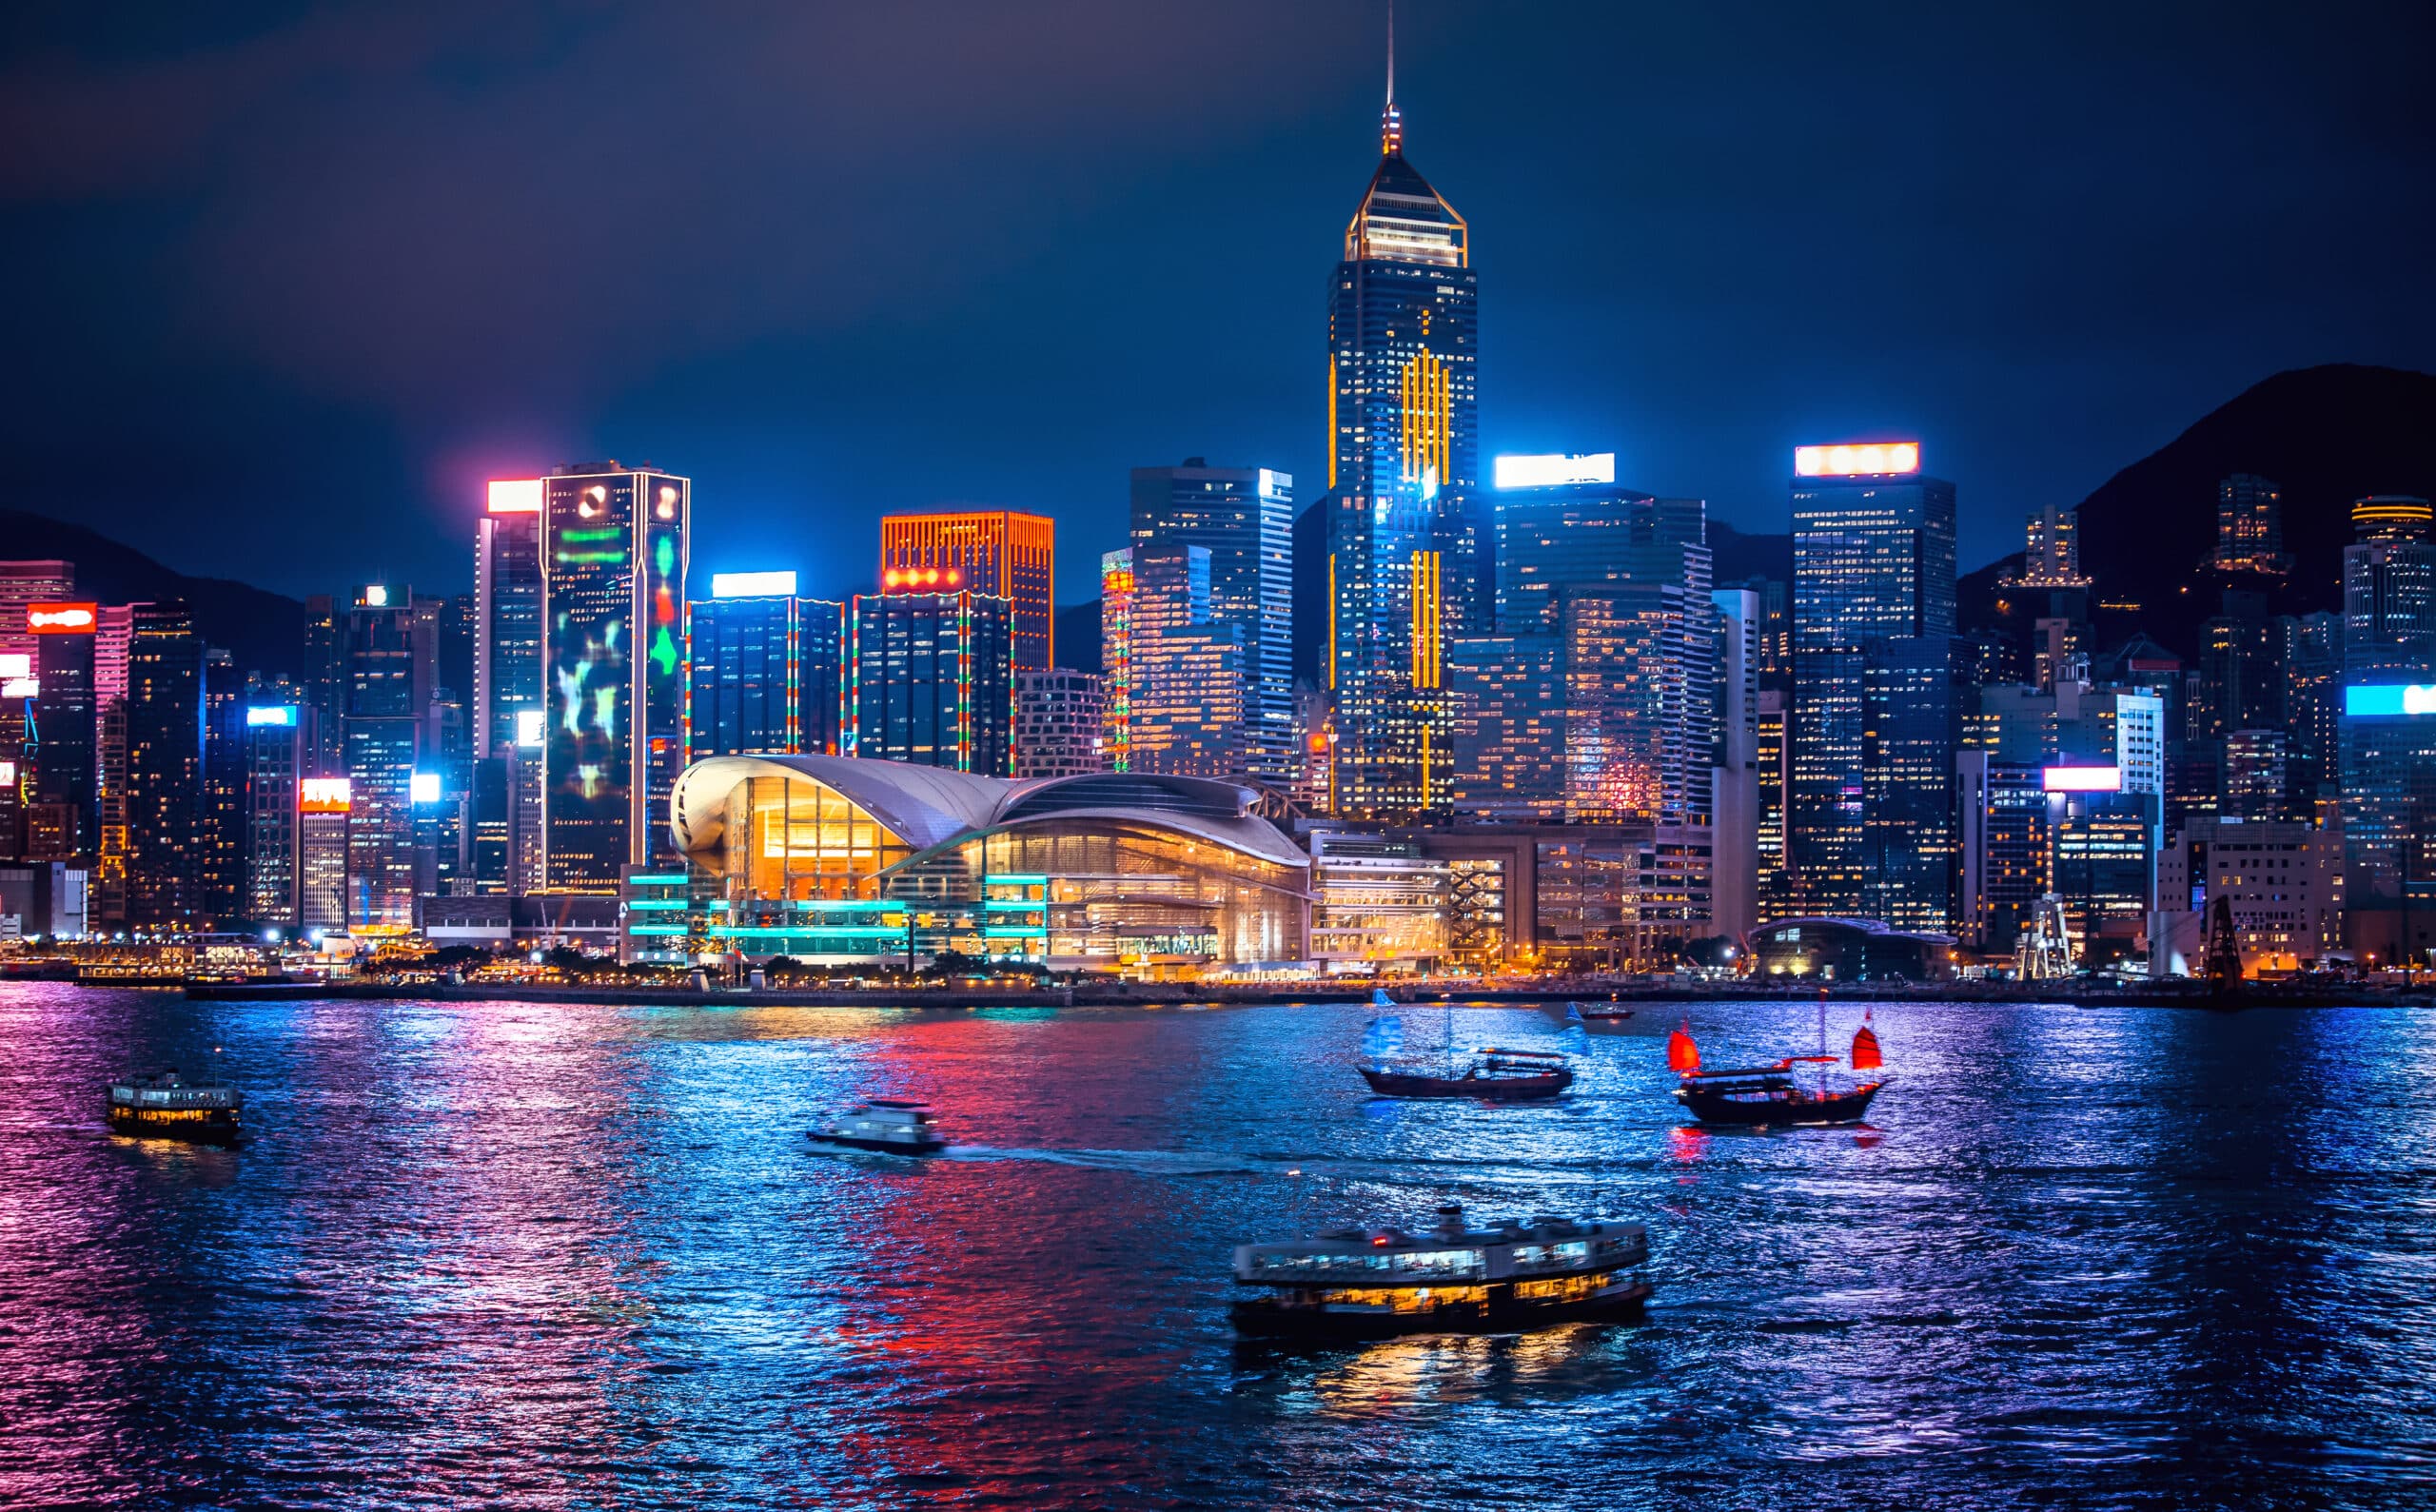 Hong Kong Crypto ETFs کو اپریل کے آغاز کی تاریخ ملتی ہے - بغیر سلسلہ